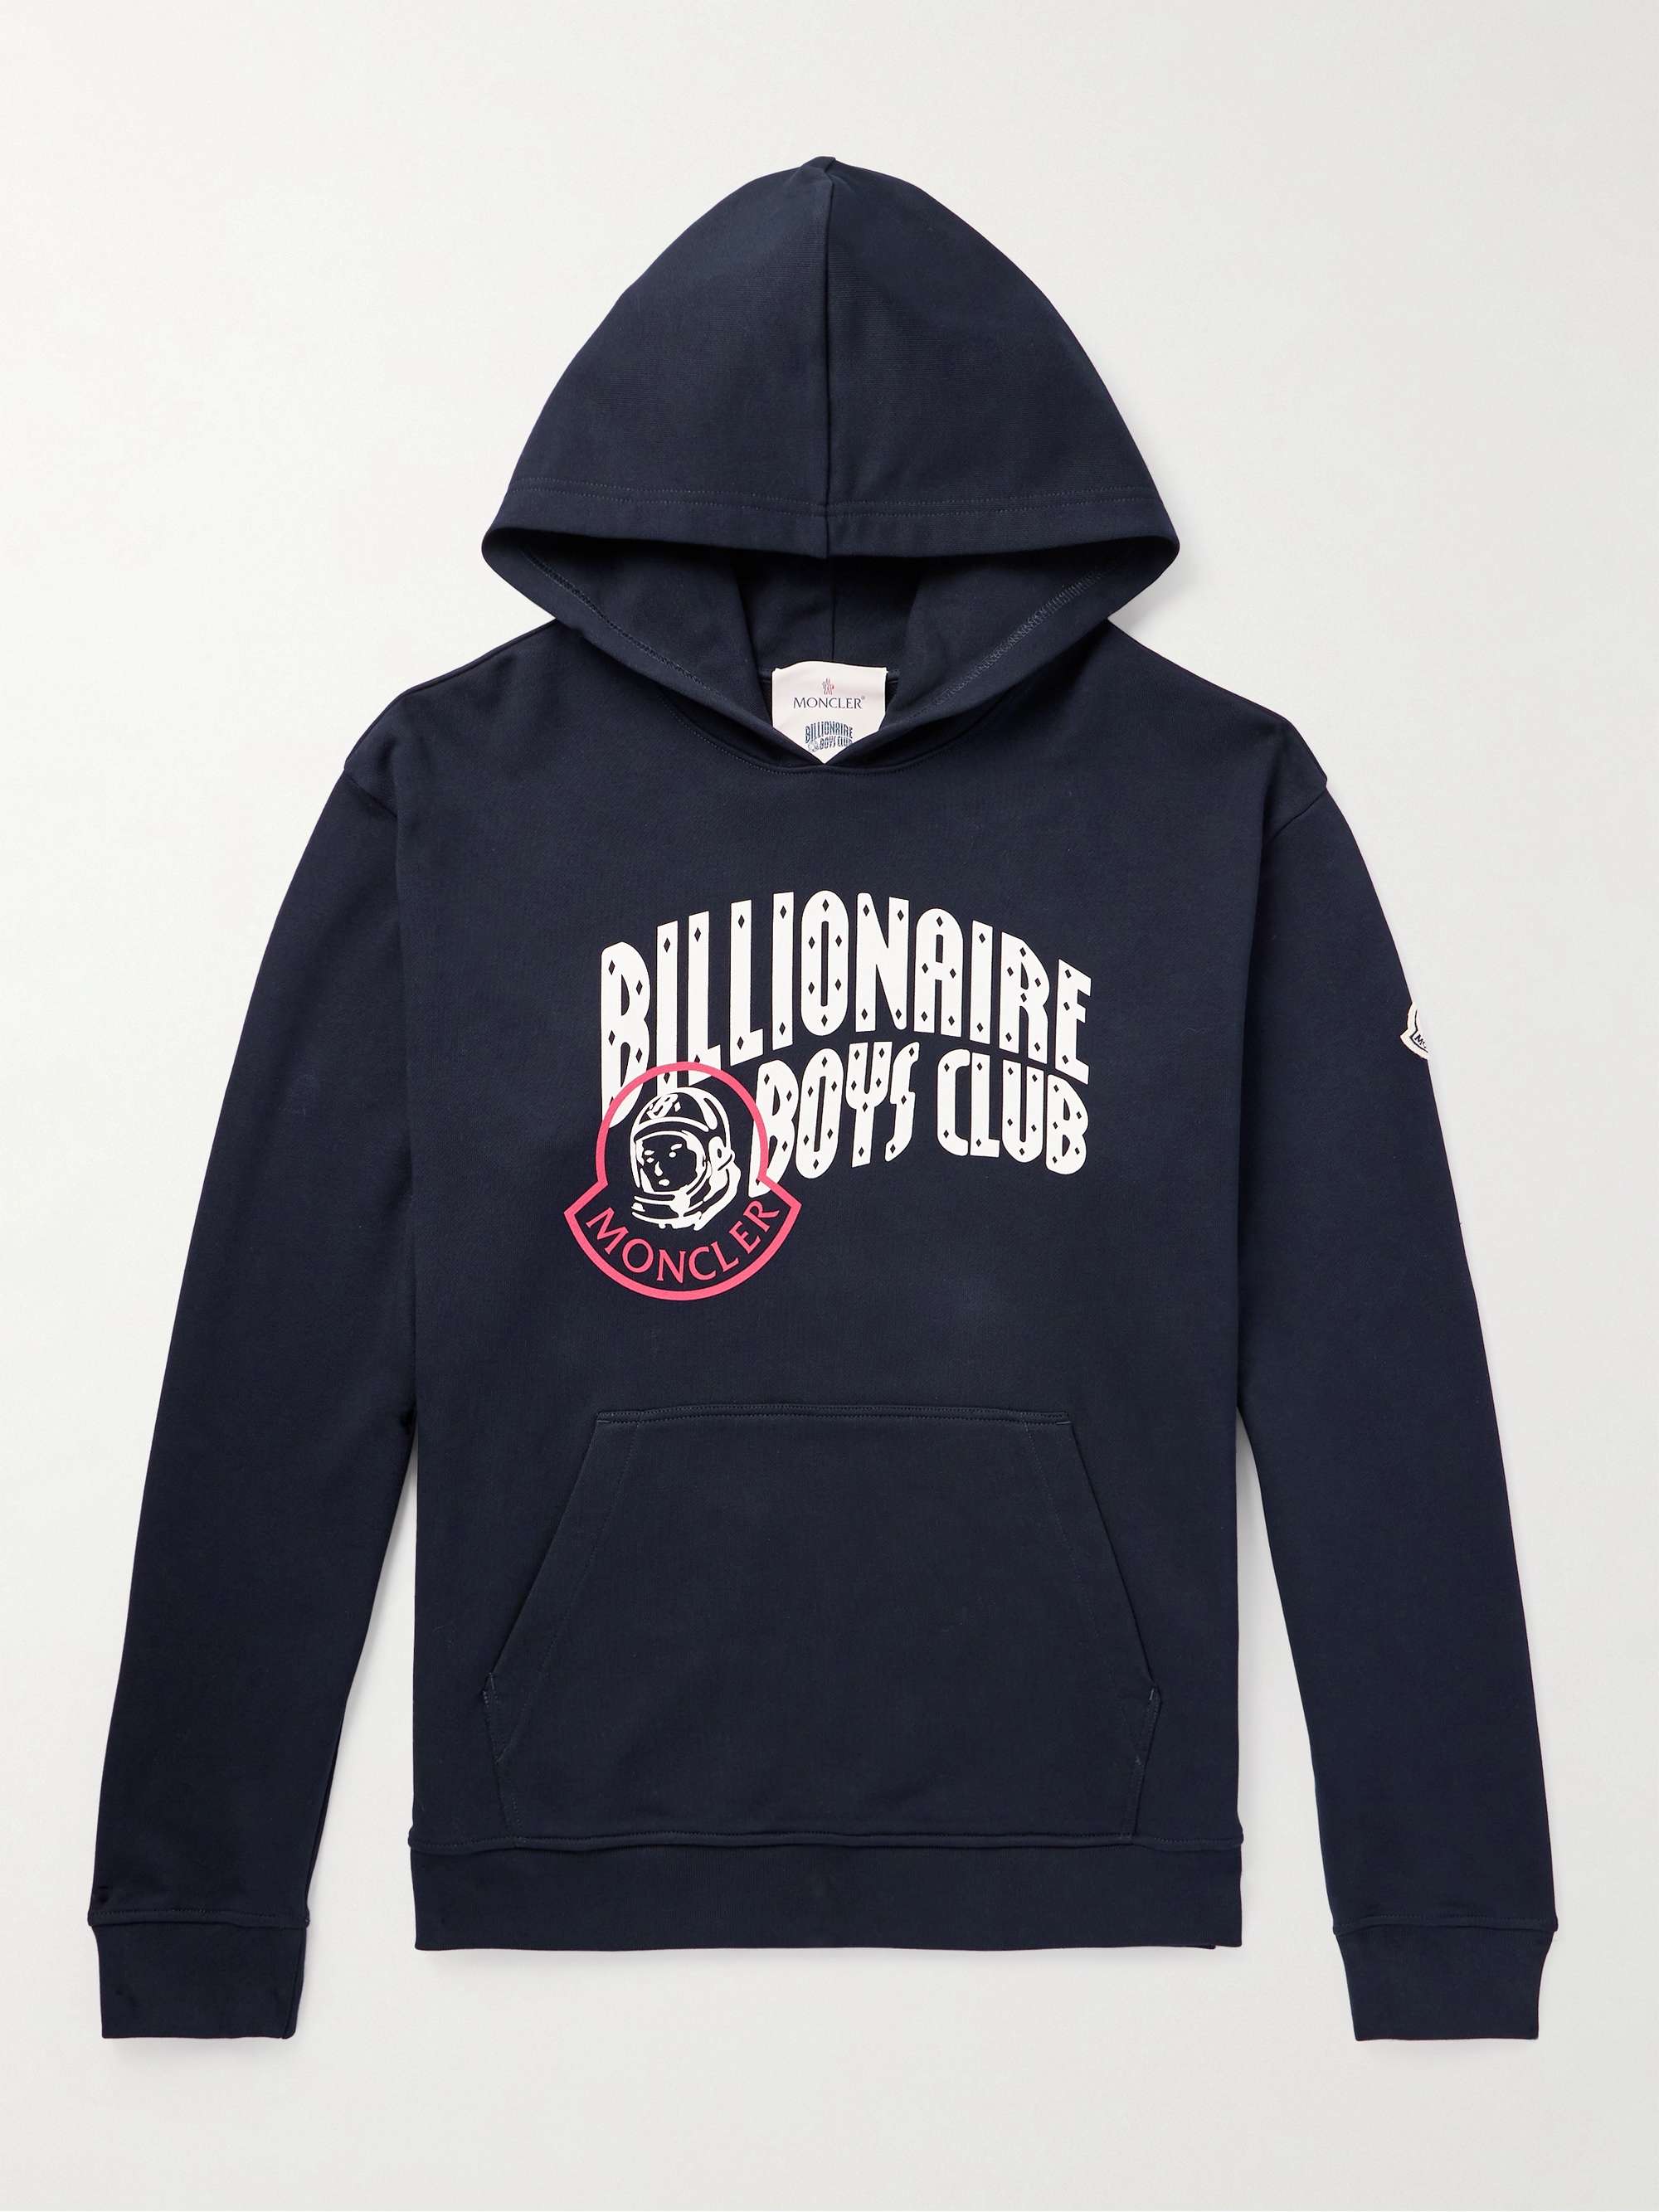 billionaibillionaire boys Club 【ice cream】フーディー